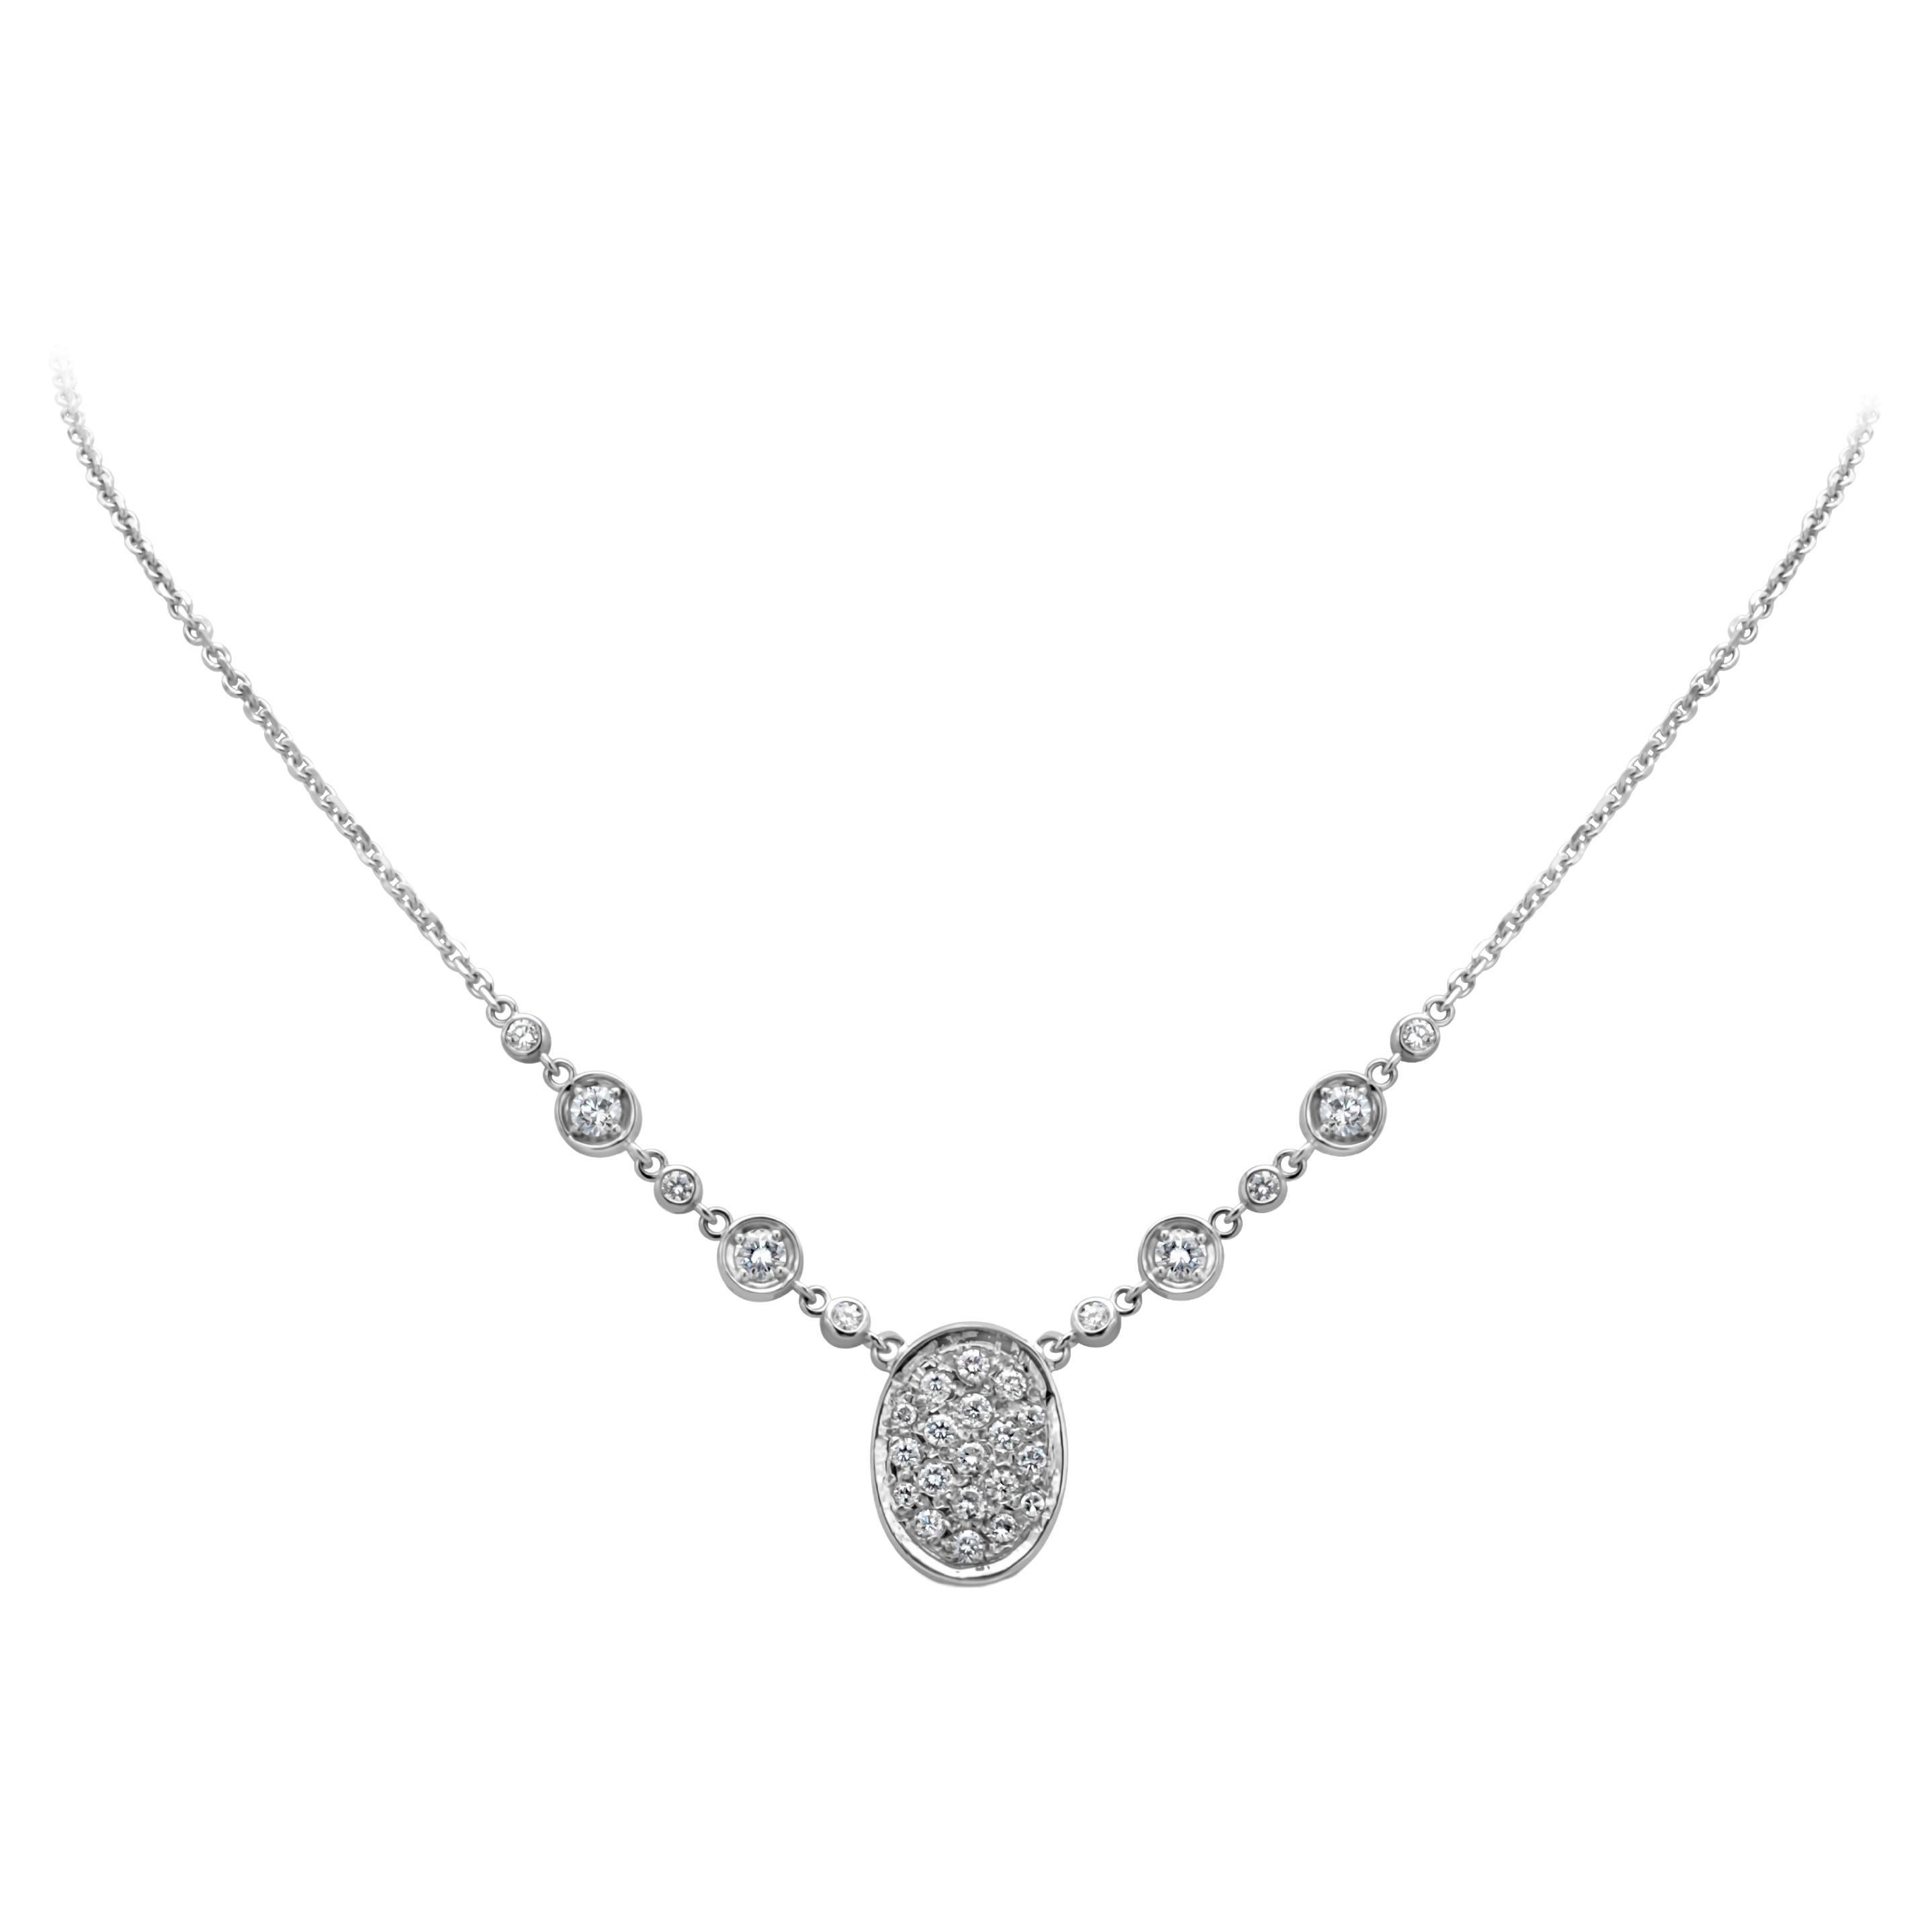 1.24 Carats Total Round Cut Diamond Fashion Pendant Necklace